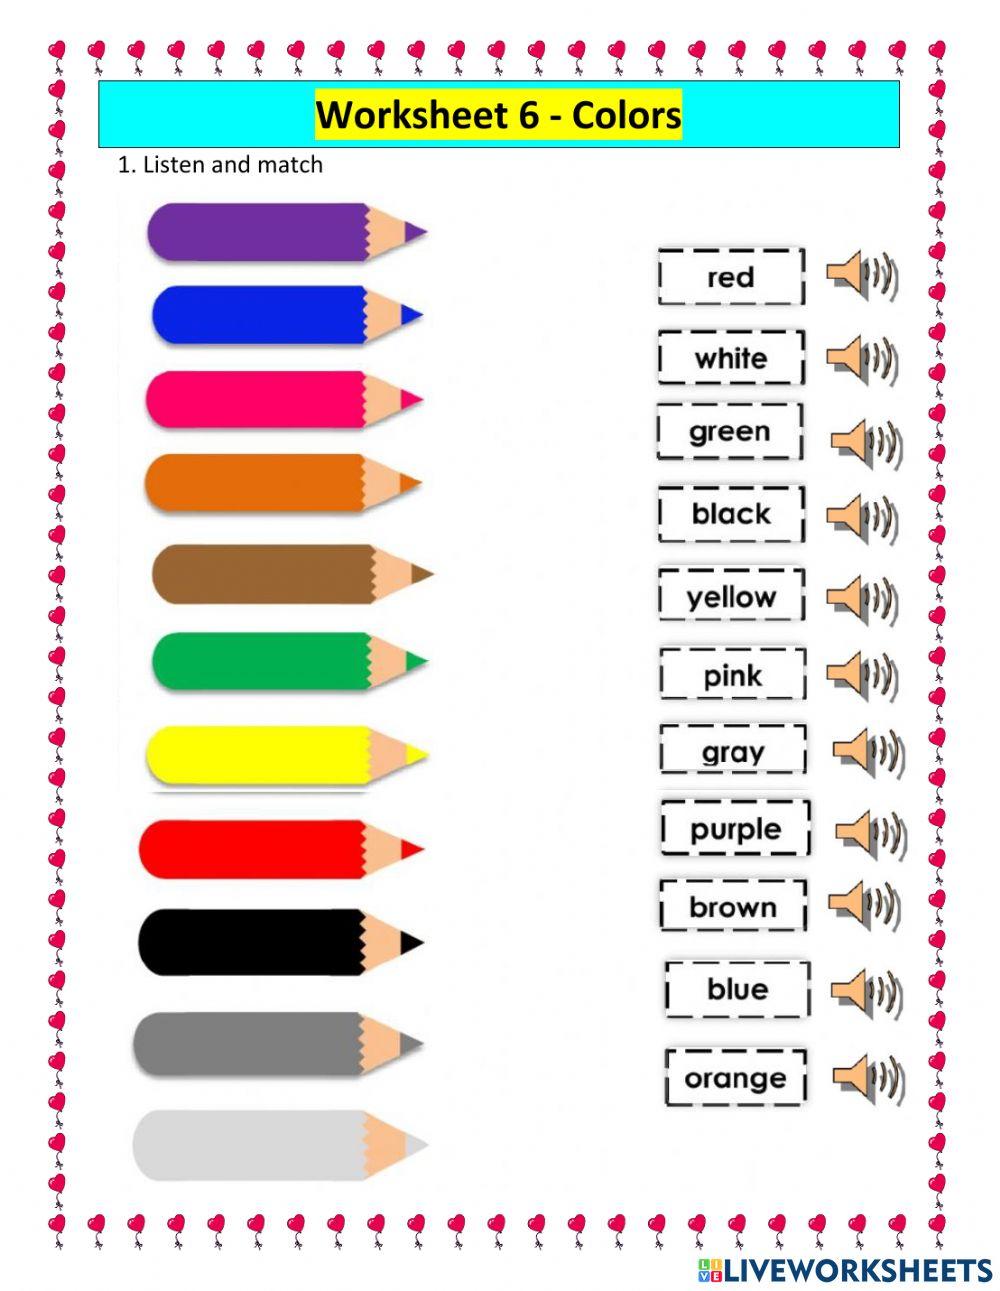 Worksheet 6 - Colors